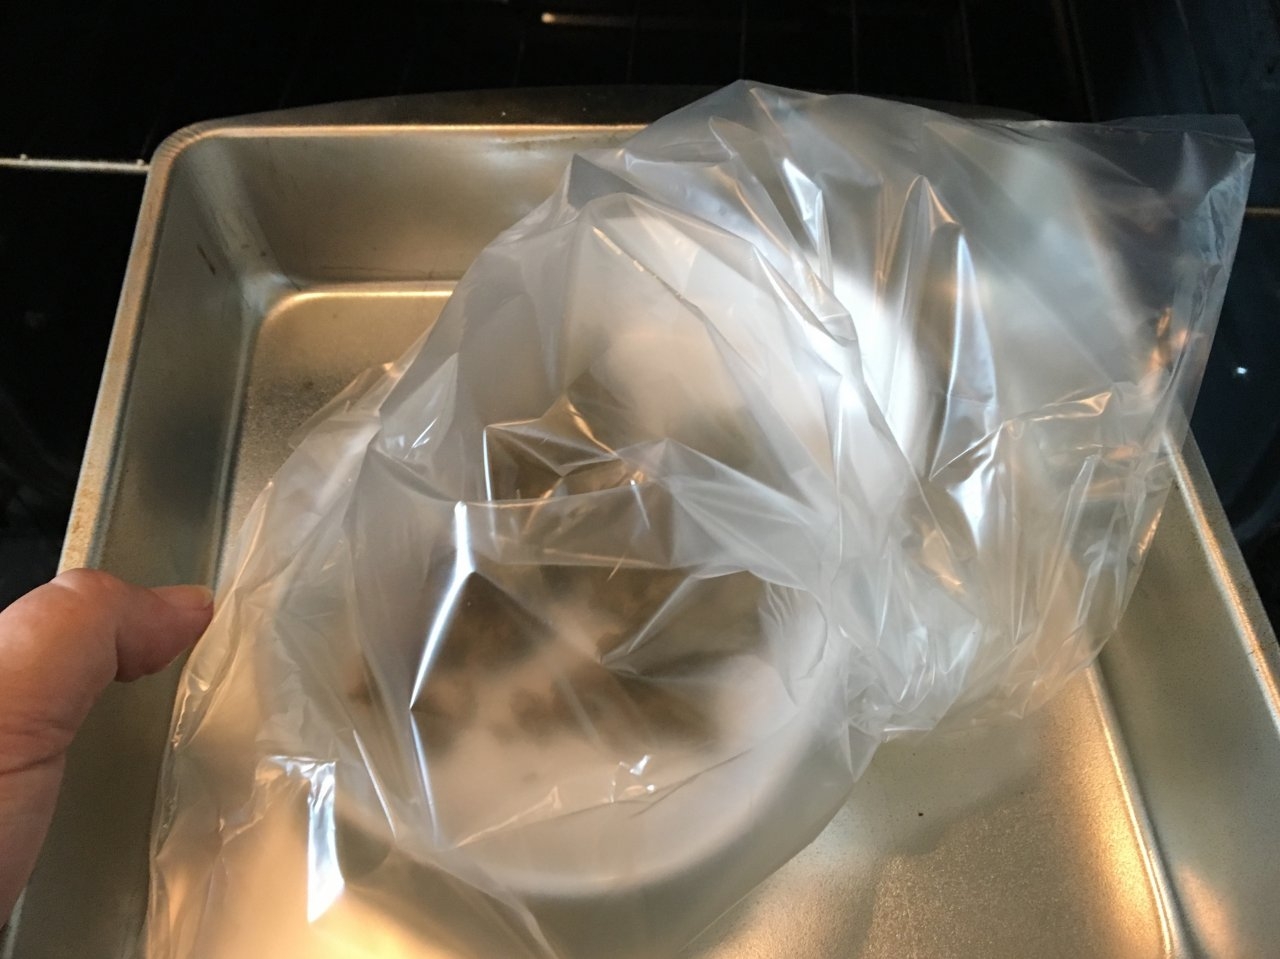 Place into roasting bag on baking sheet or pan